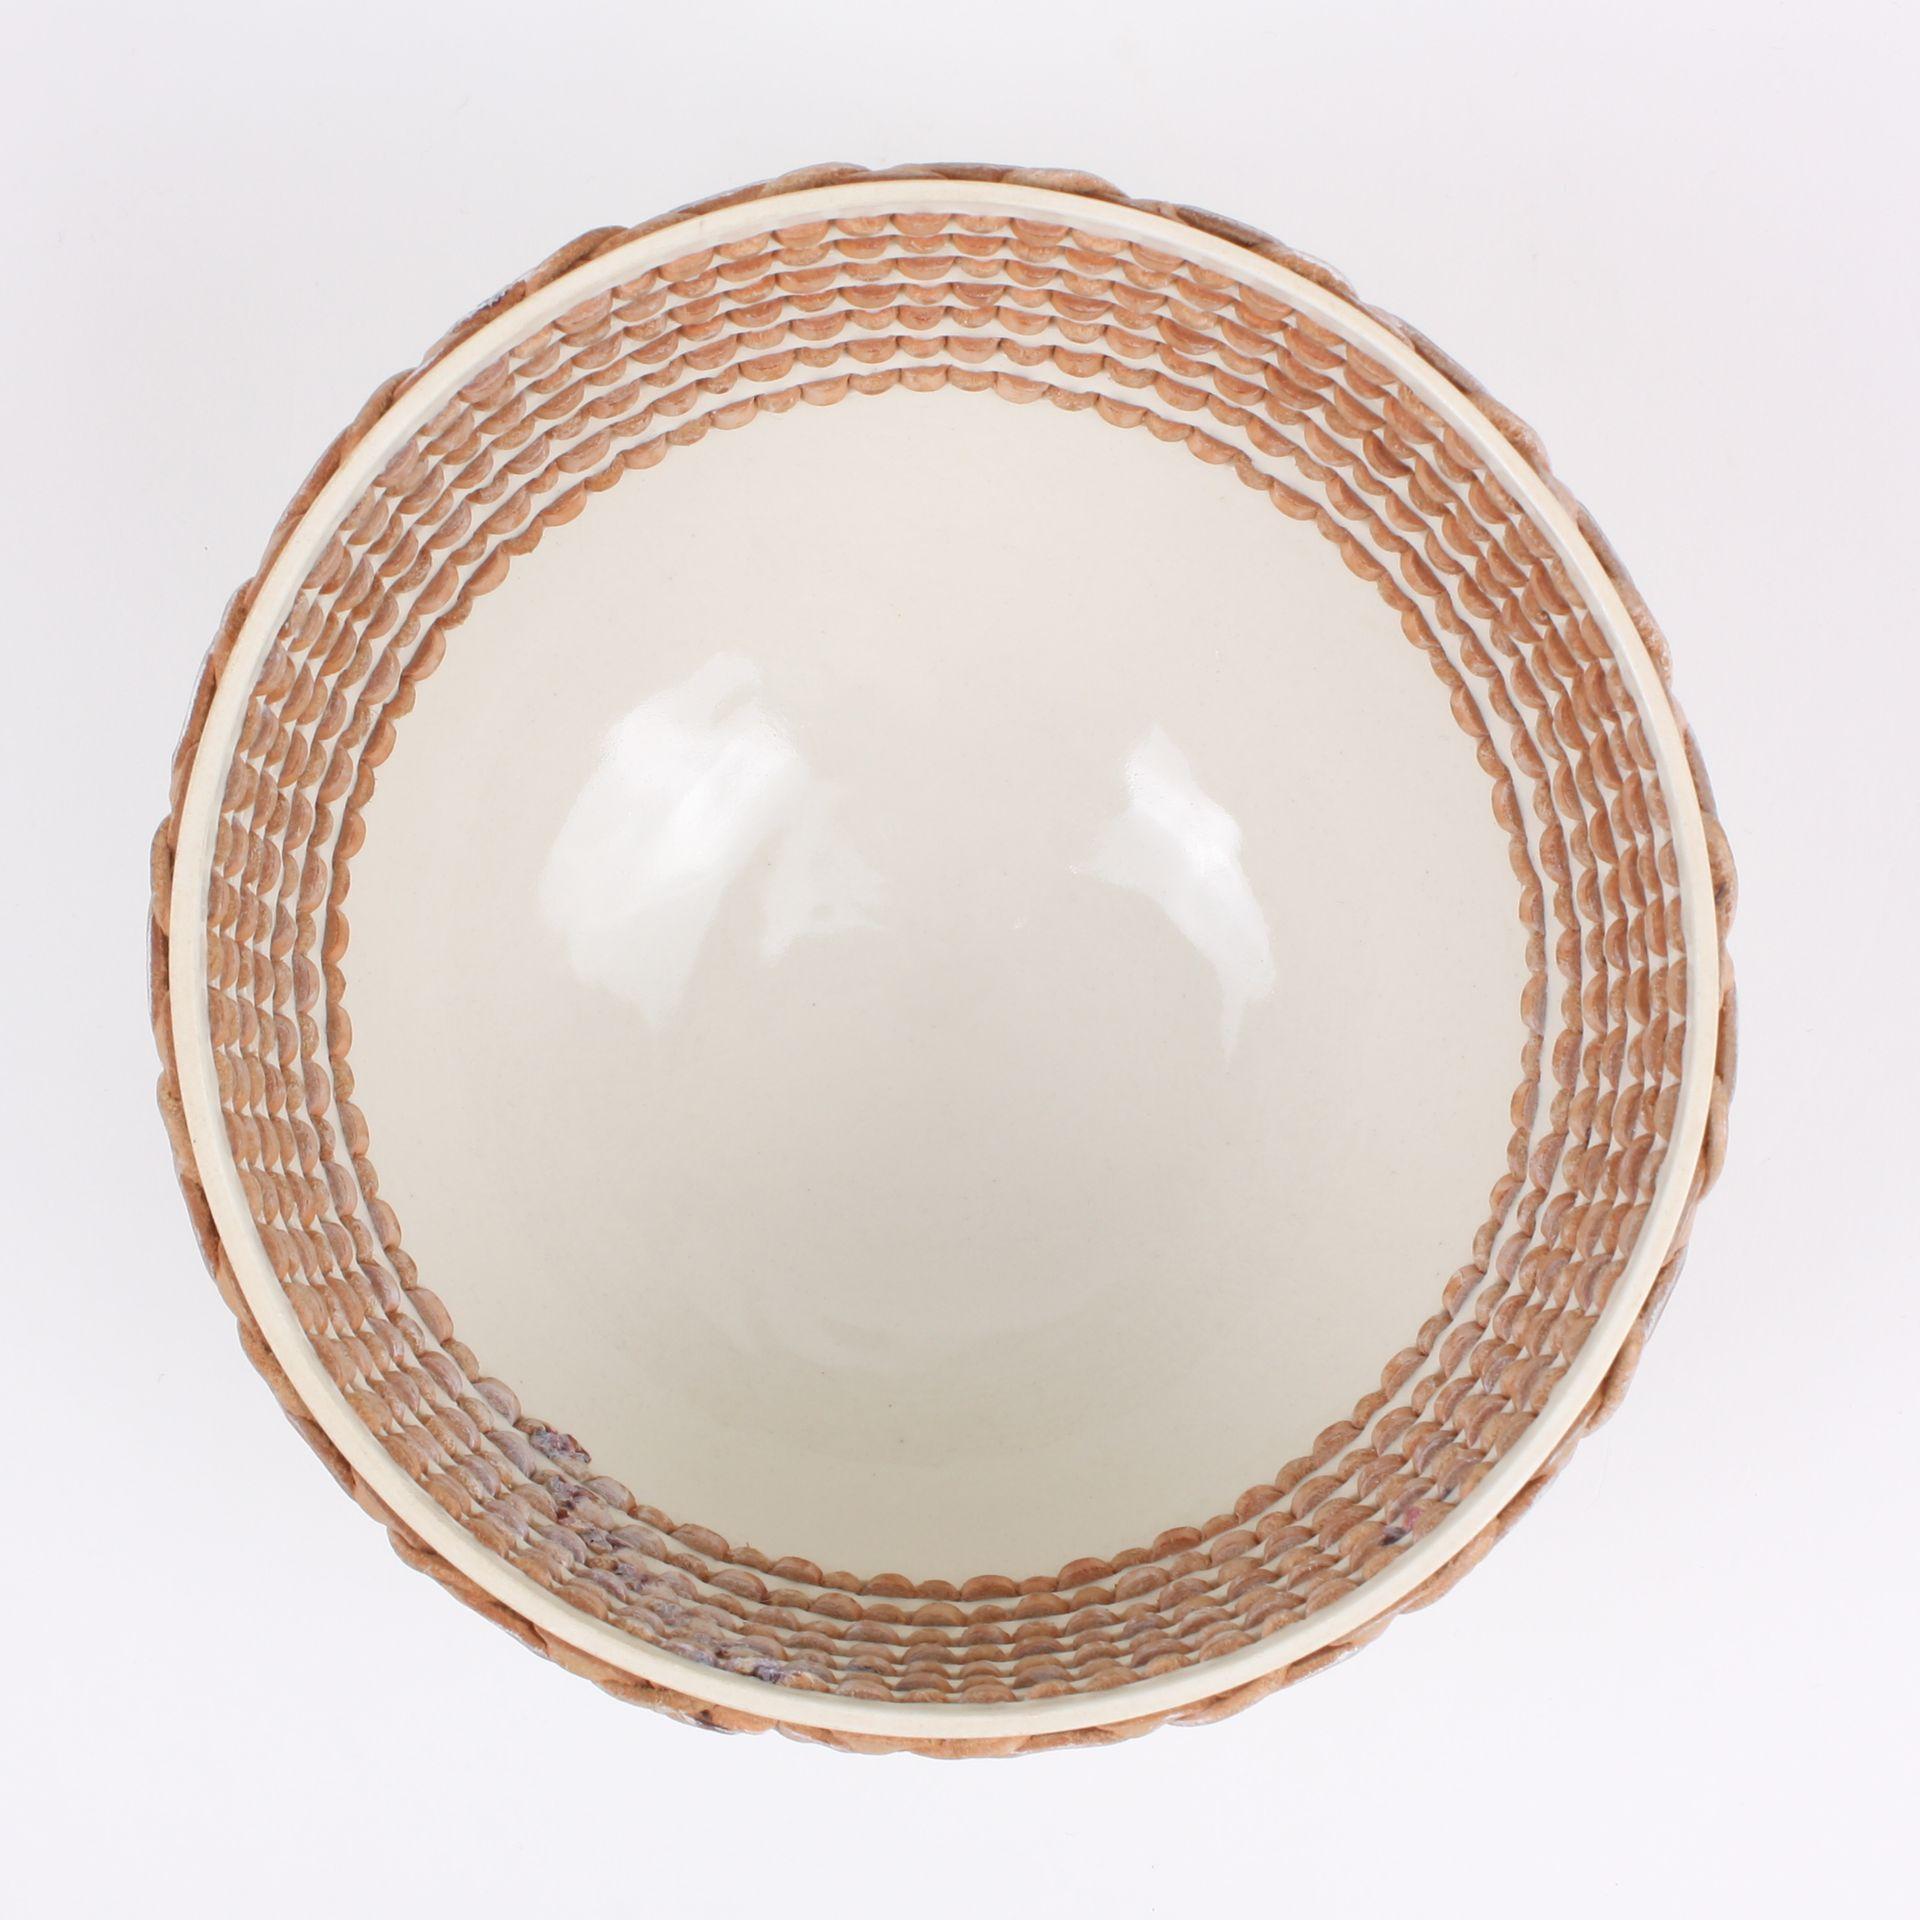 Embroidered Decorative Ceramic Bowl, Gladiateur #2 4